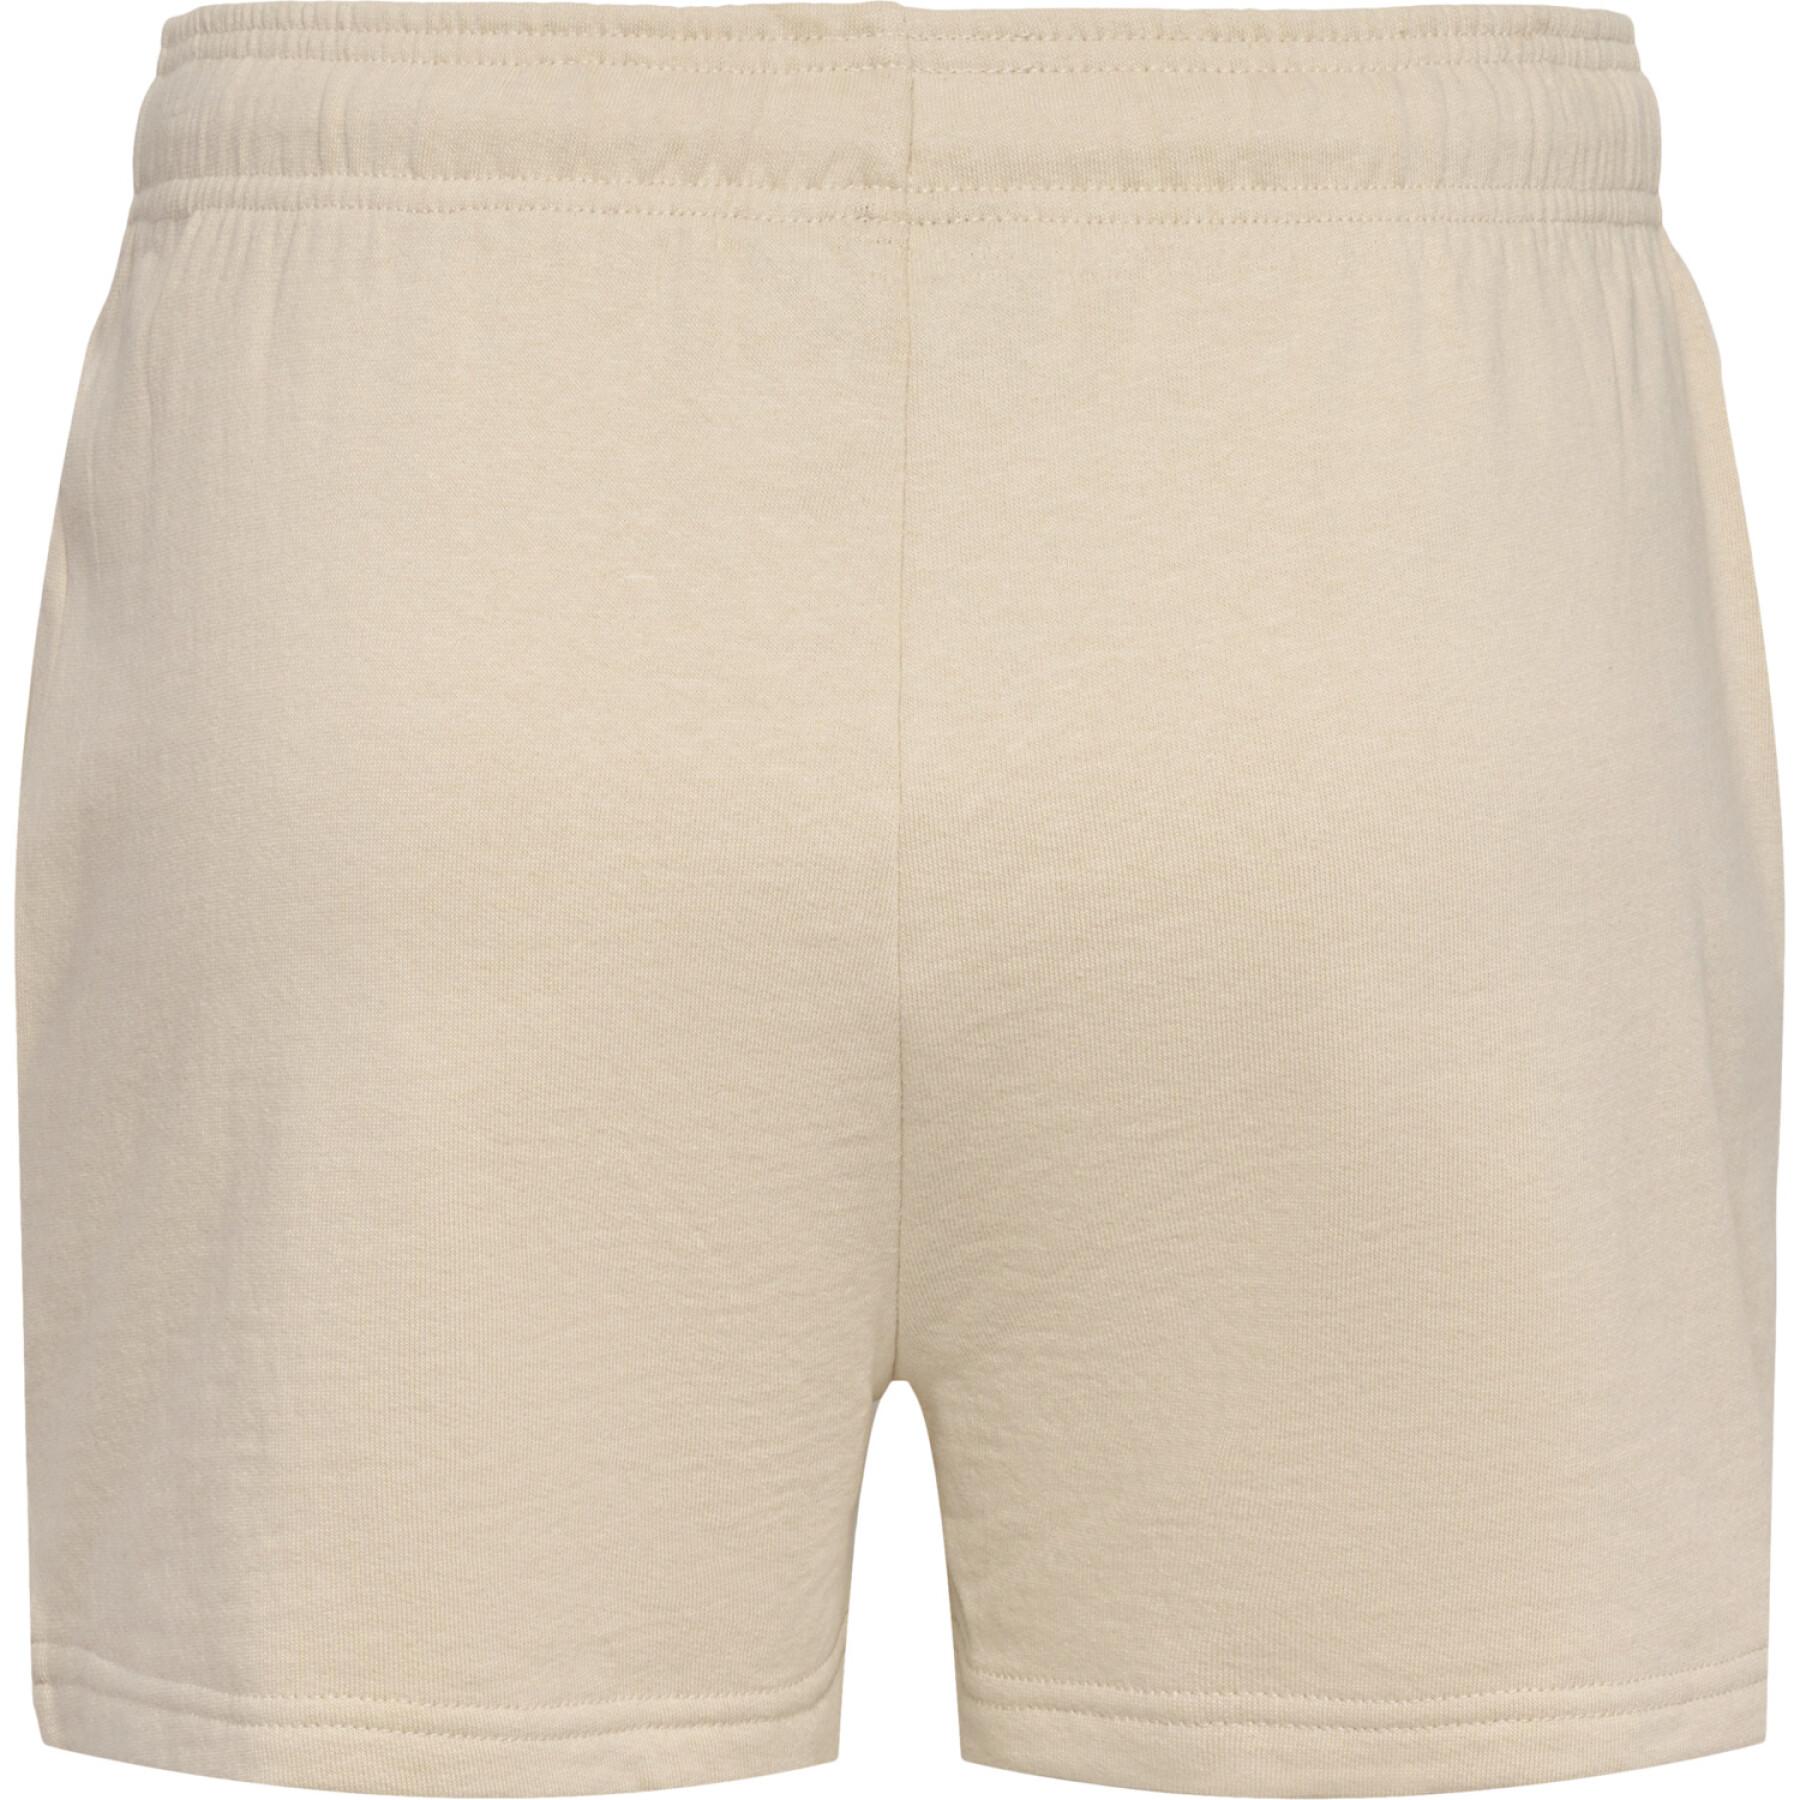 Women\'s shorts Hummel Legacy - Skirts & Shorts - Clothing - Women